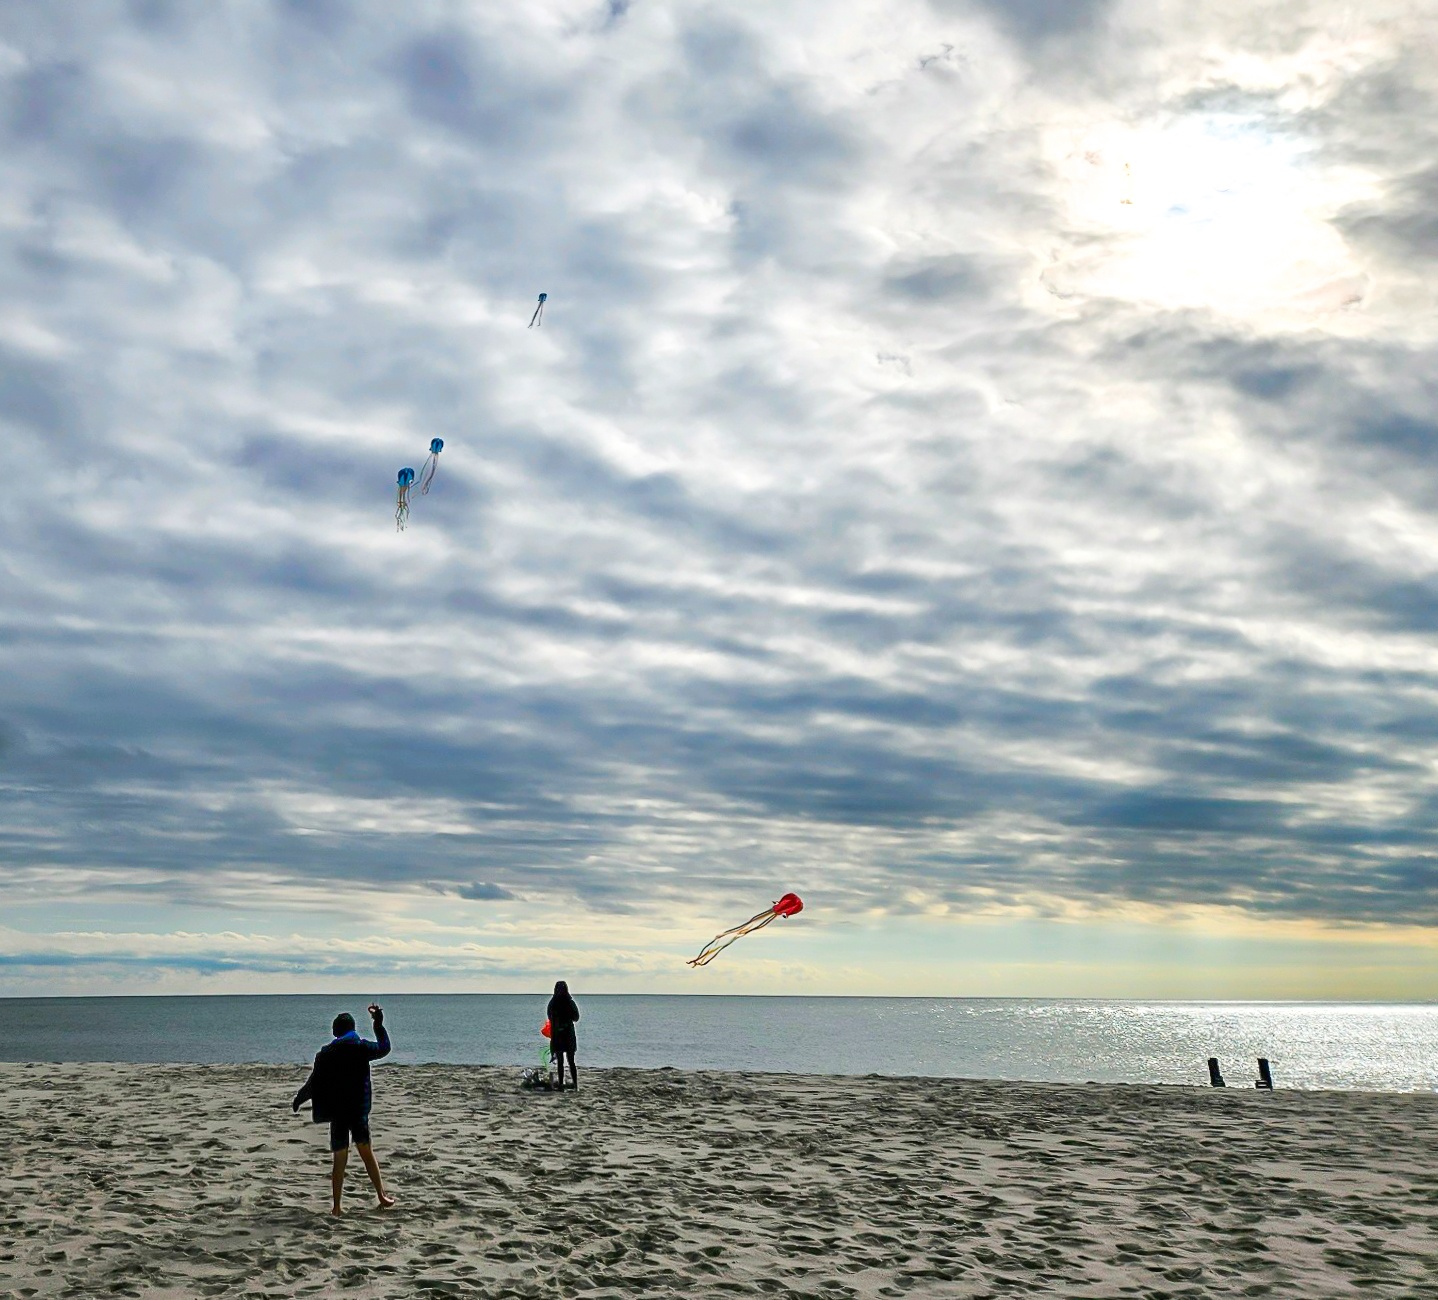 Enjoying the Day flying kites on the beach